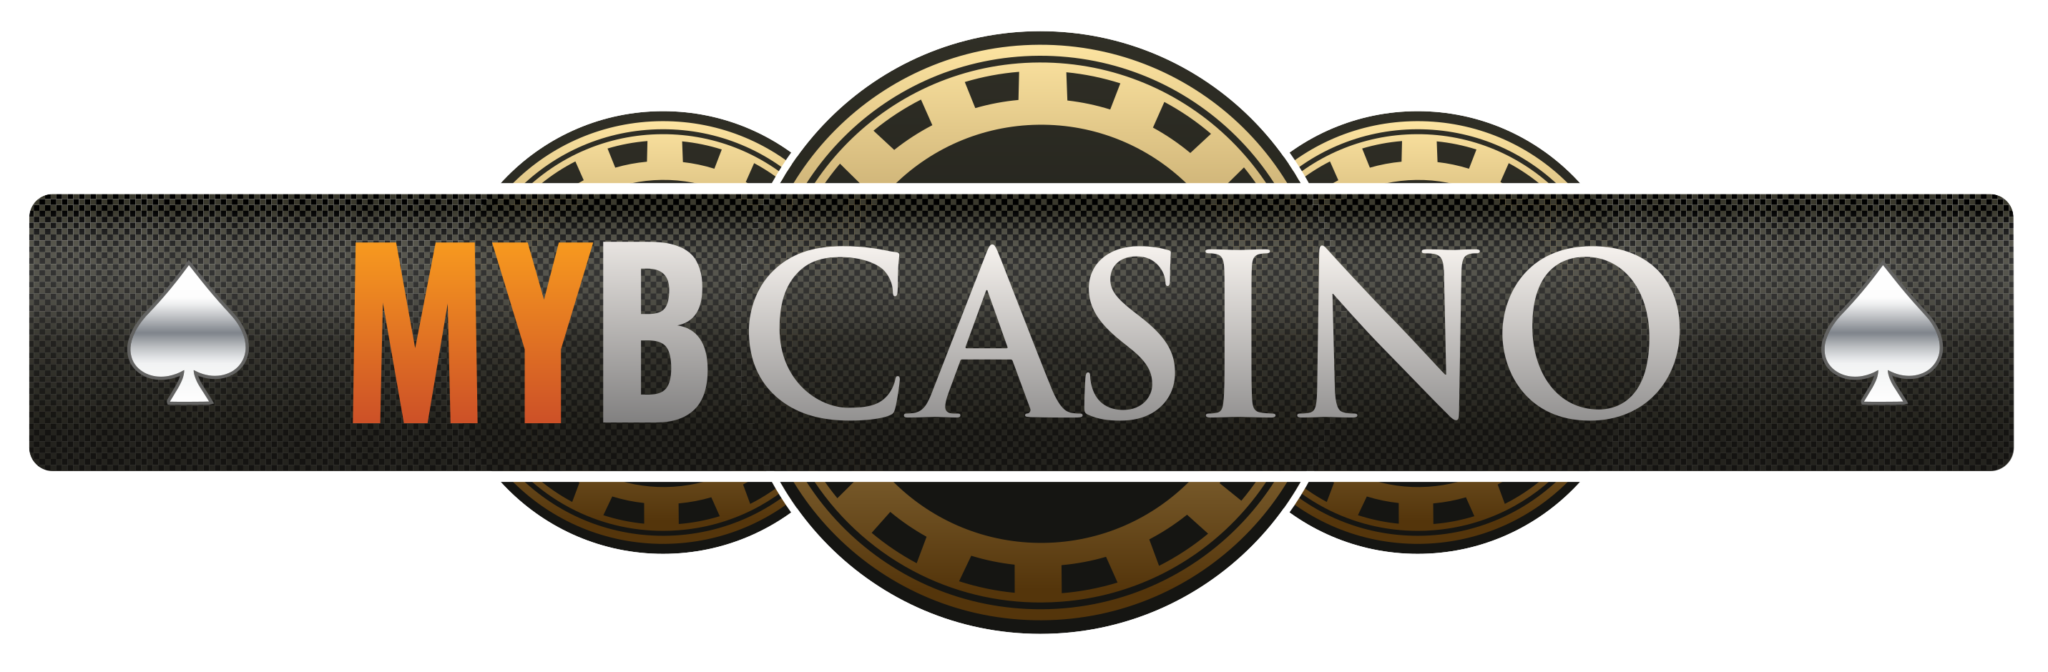 what is the best legit online casino